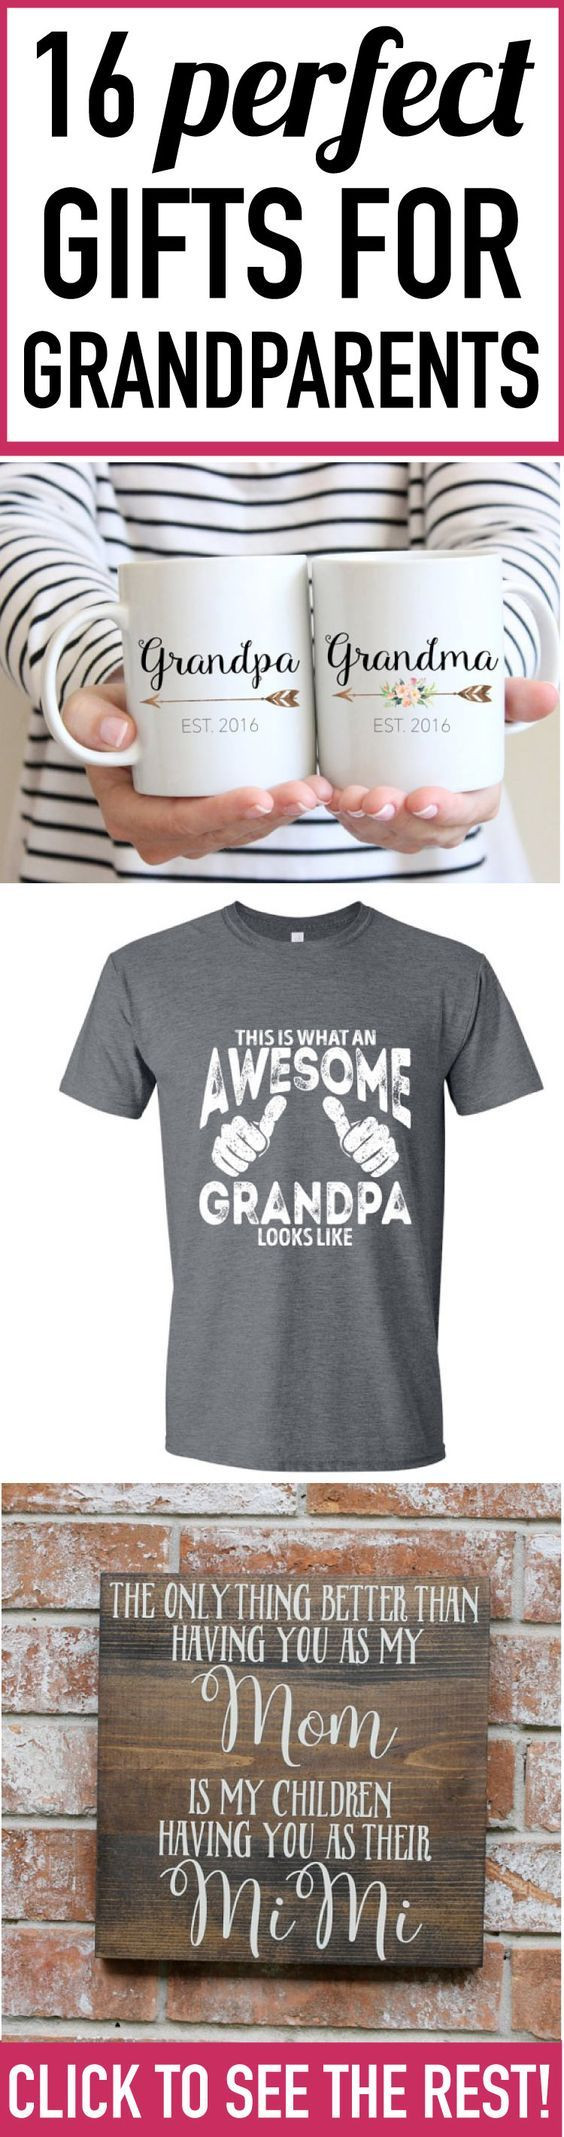 Grandmother Christmas Gift Ideas
 25 best Gift ideas for grandparents ideas on Pinterest